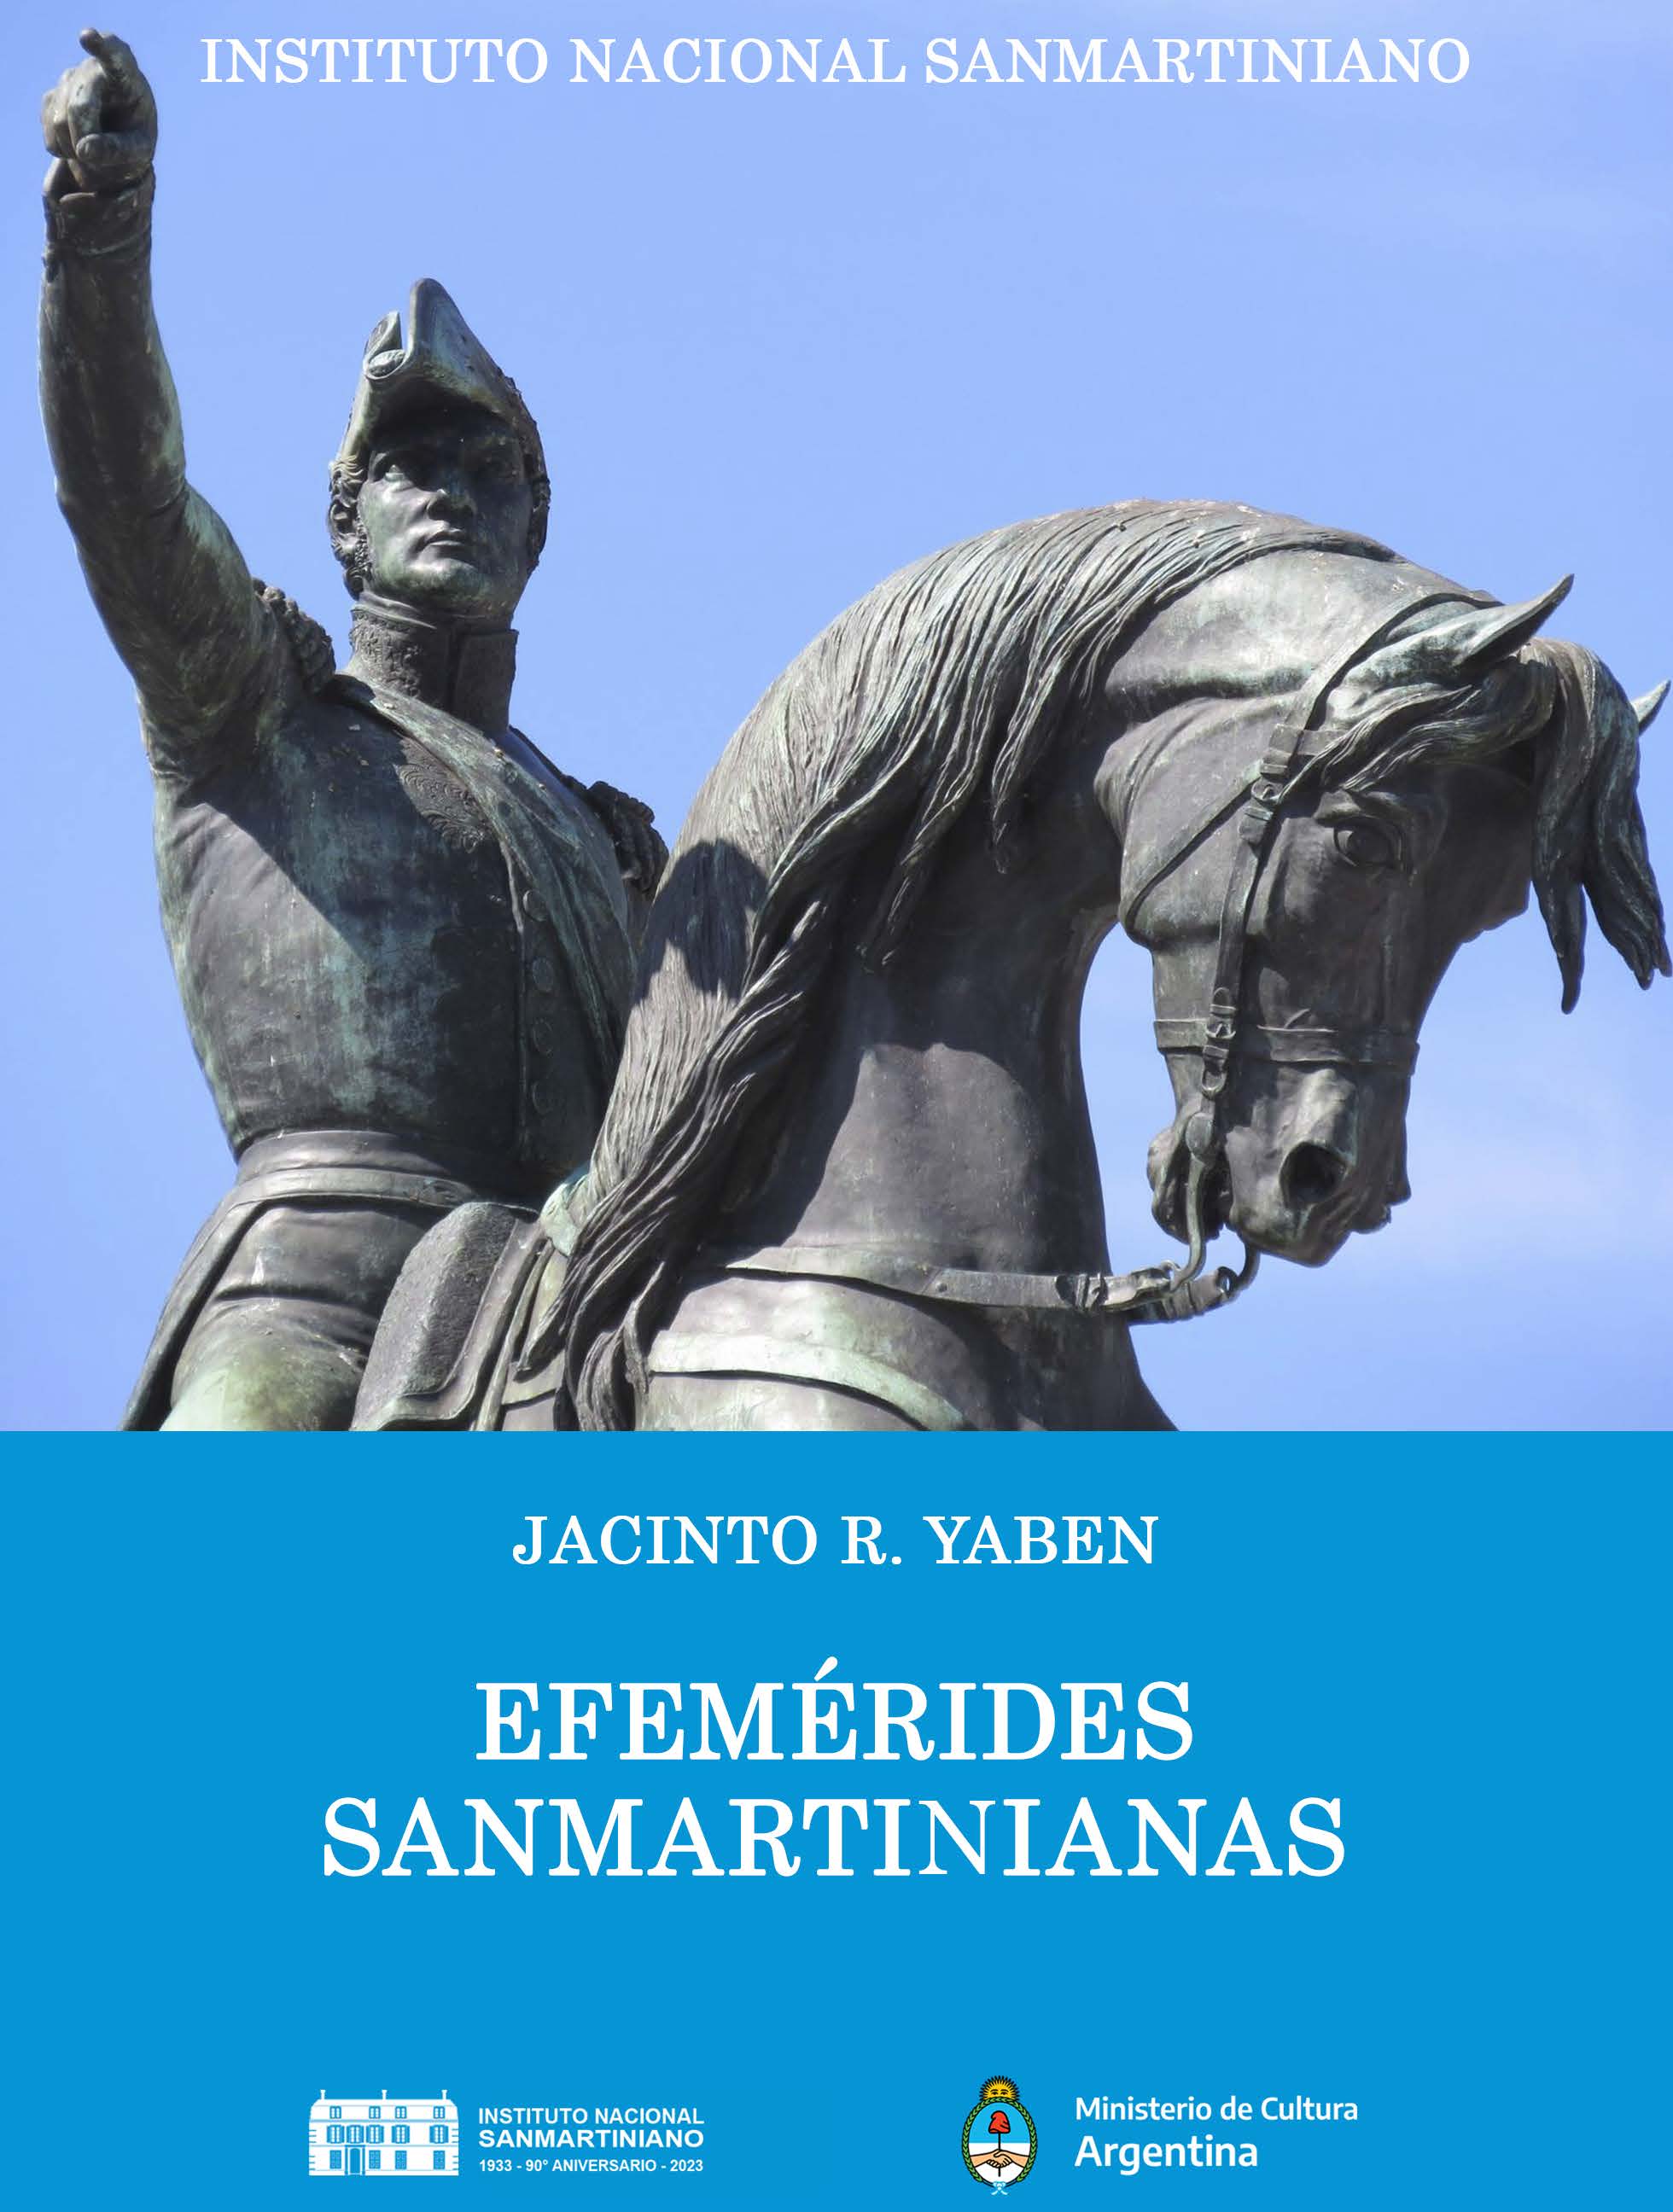 YABÉN, Jacinto R. "Efemérides Sanmartinianas". Instituto Nacional Sanmartiniano. Buenos Aires, 2023.